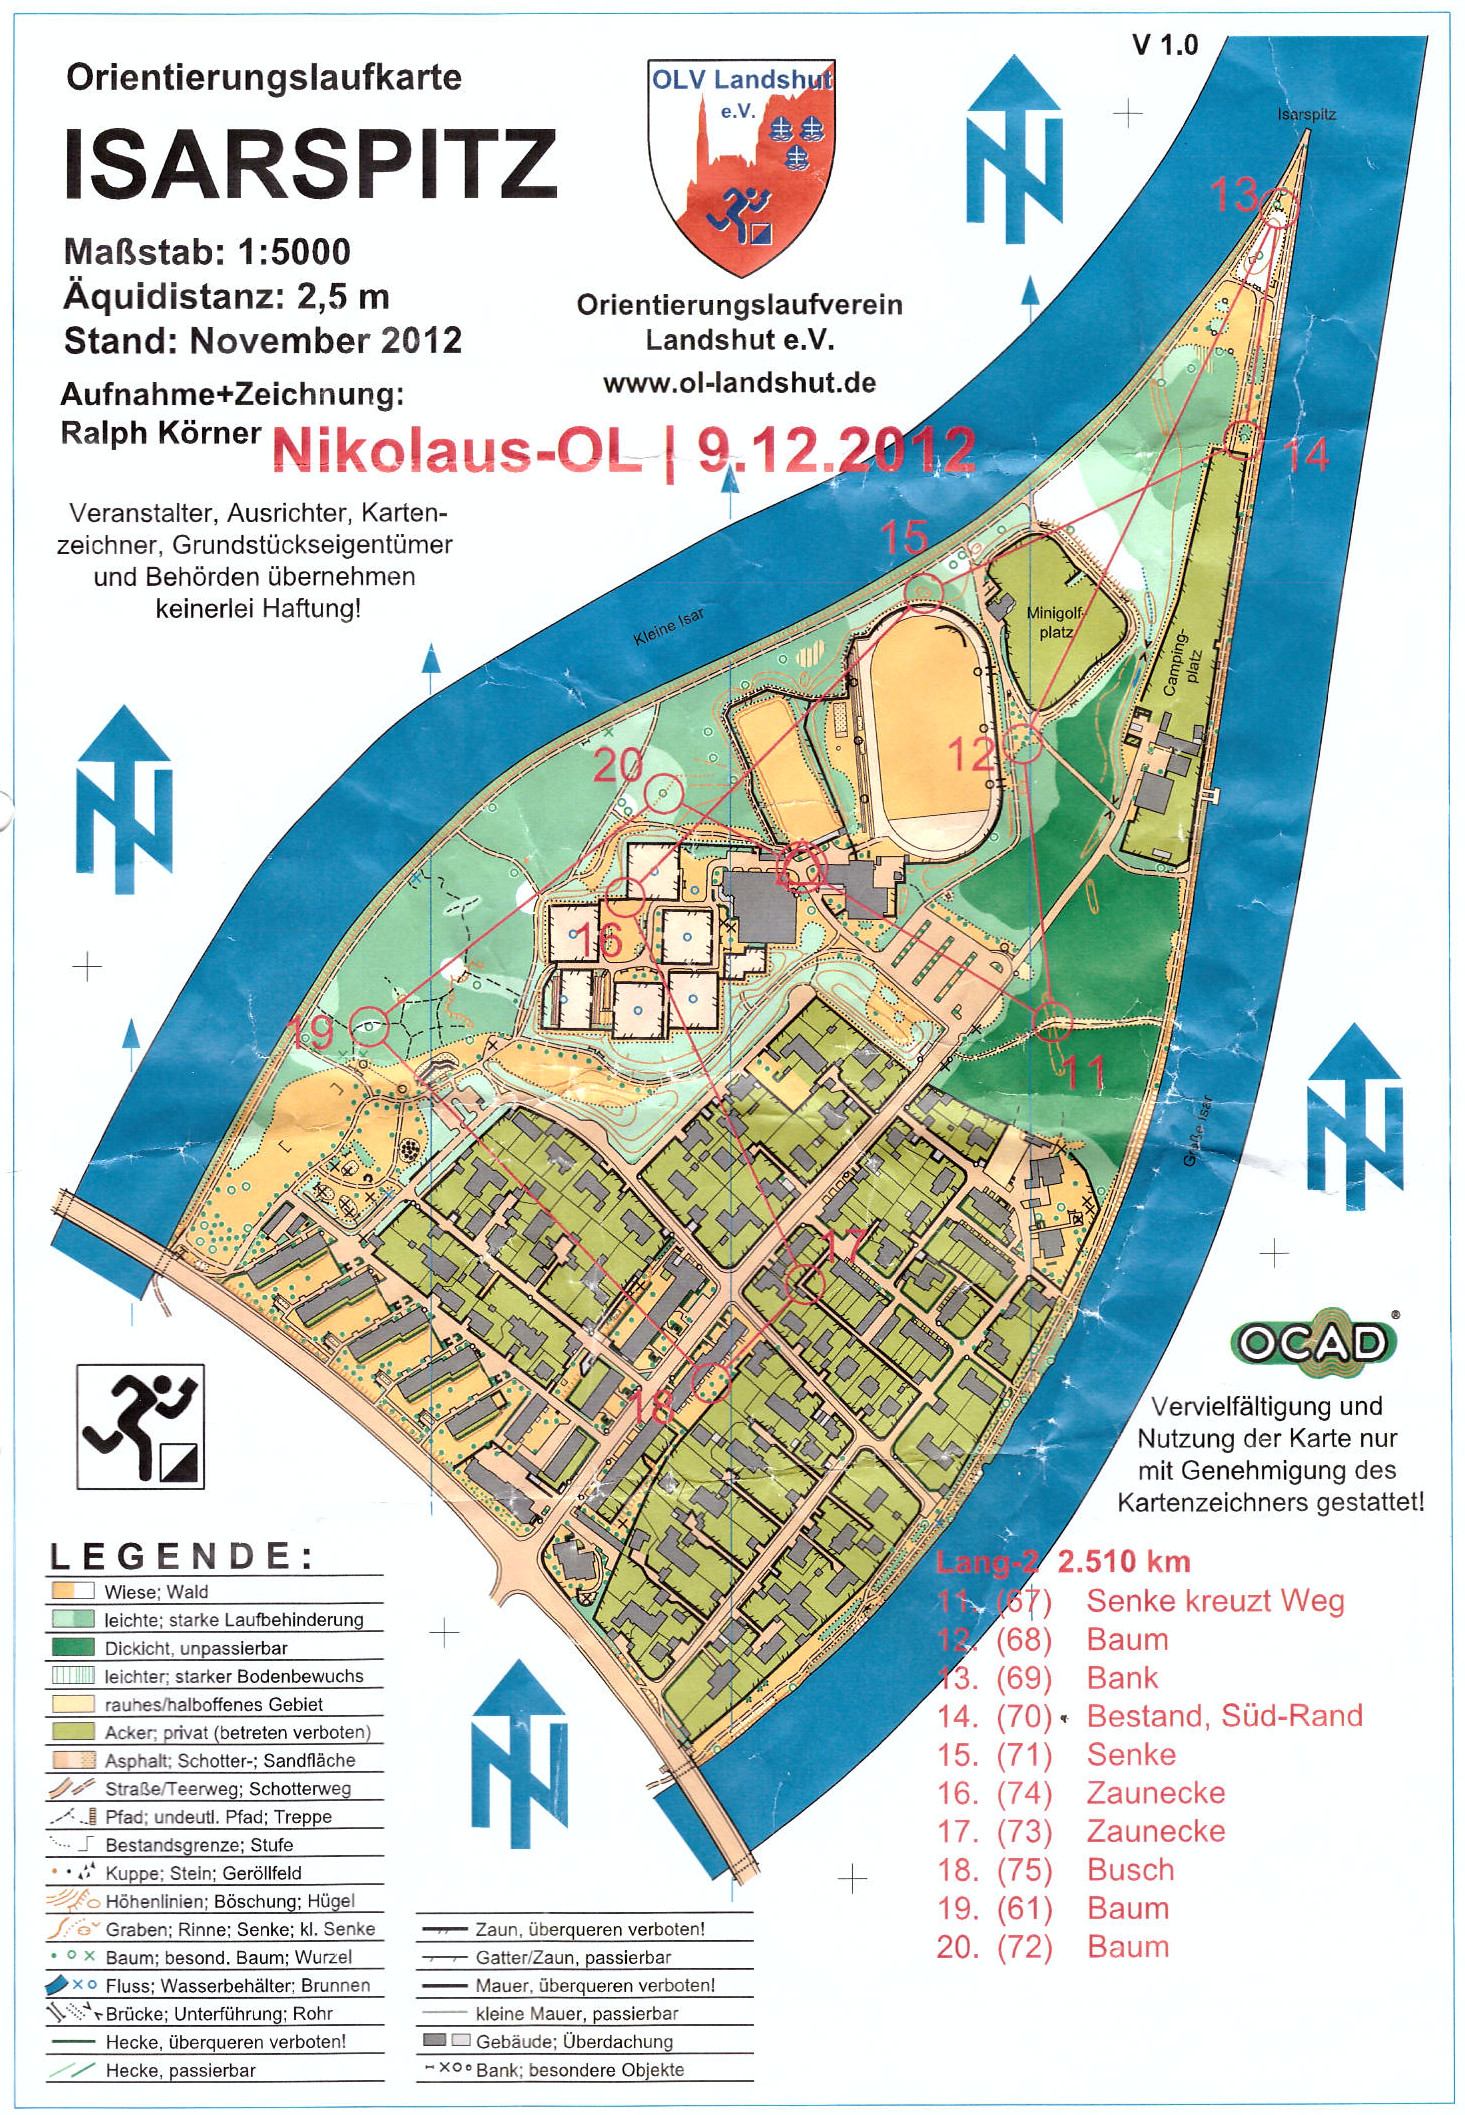 9. Landshuter Nikolaus-OL - Karte 2 (09.12.2012)